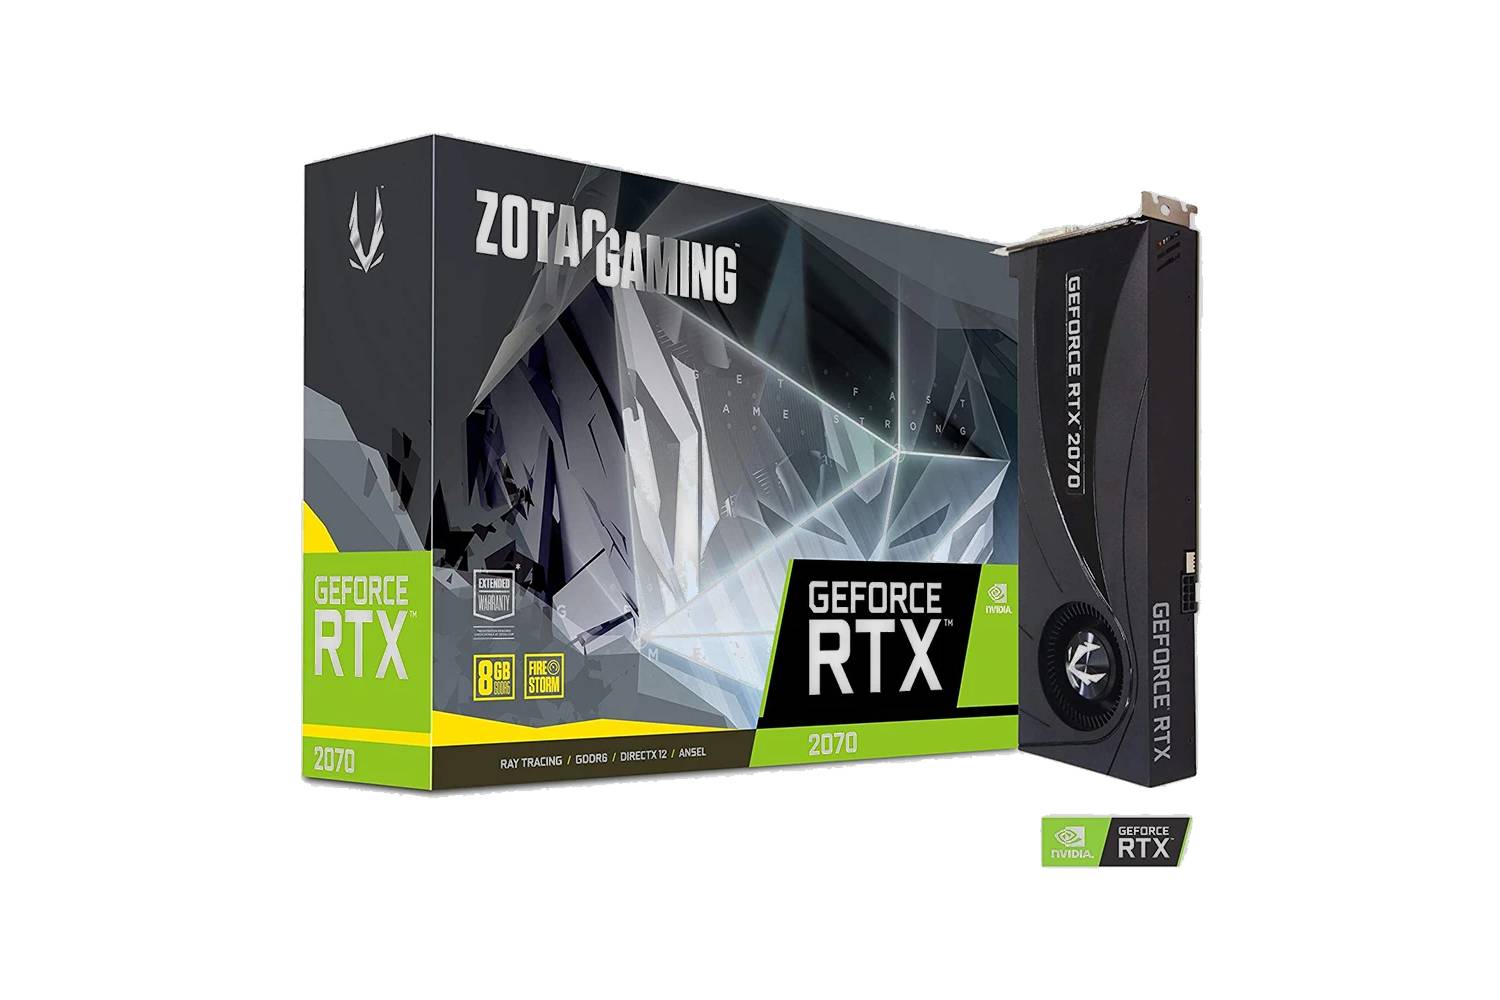 Zotac Gaming GeForce RTX 2070 Blower 8GB Graphics Card